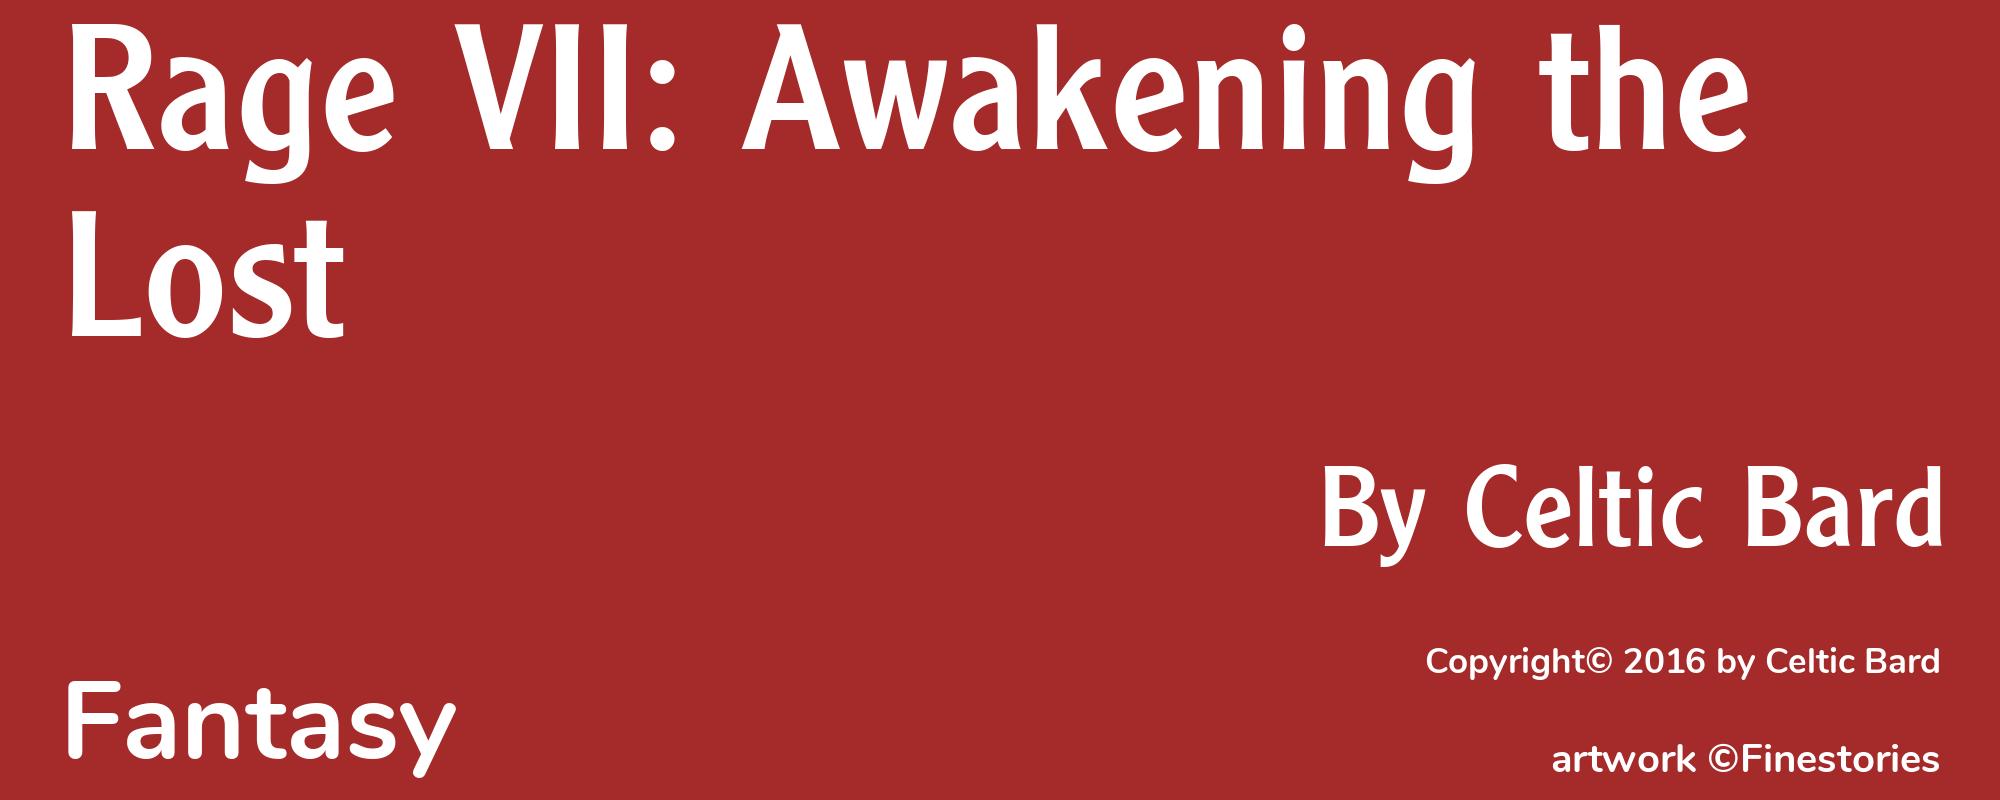 Rage VII: Awakening the Lost - Cover